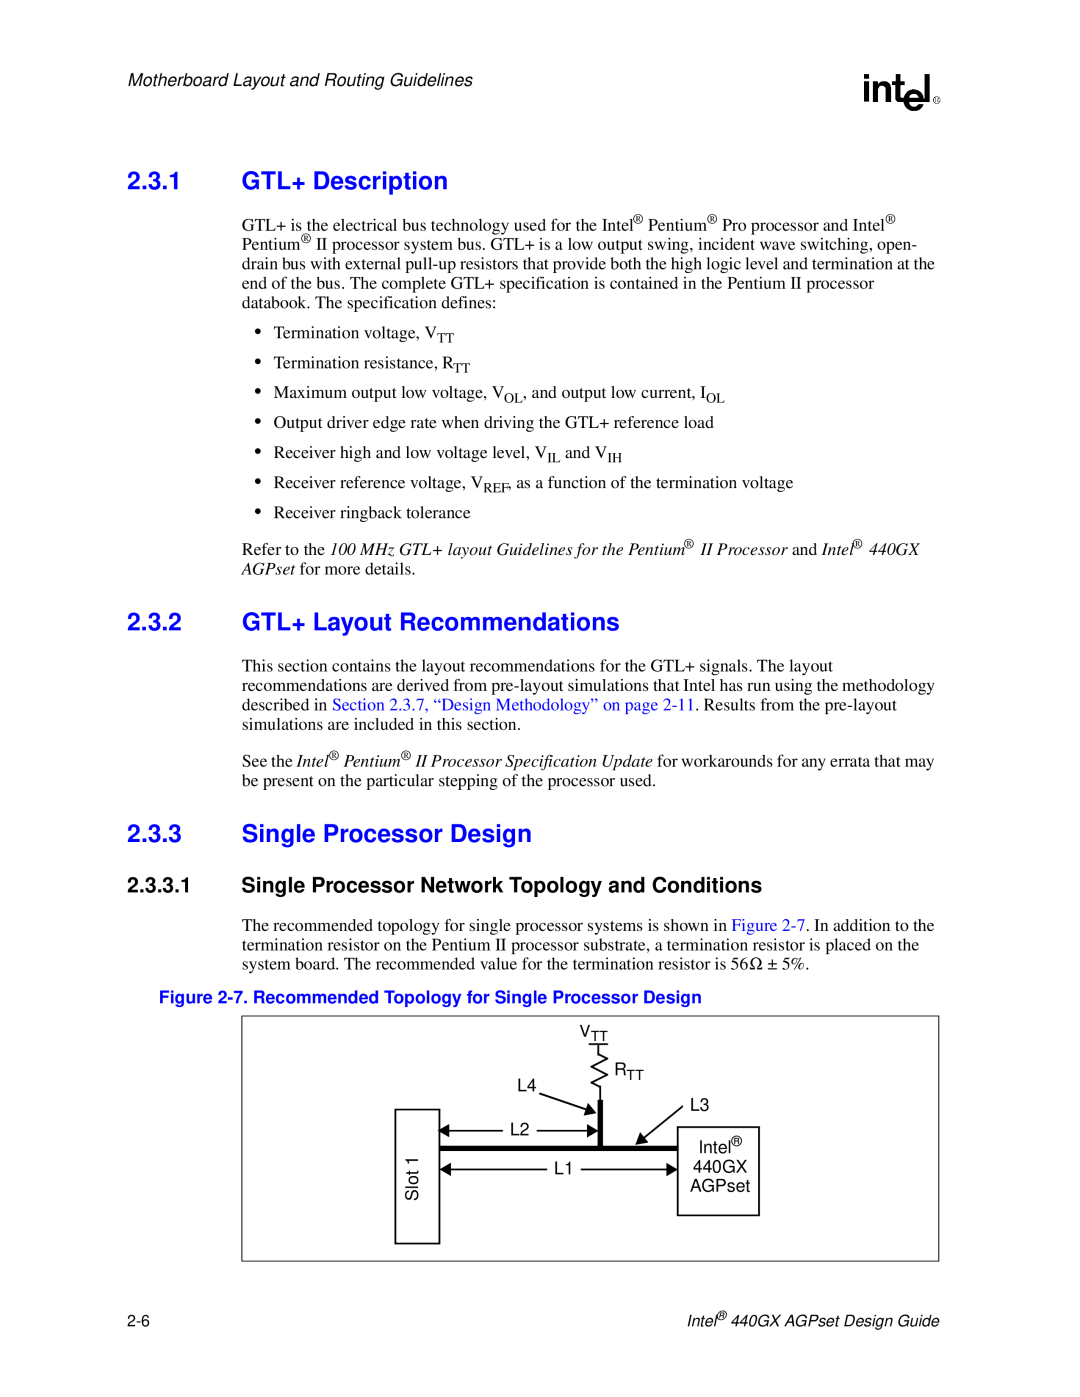 Intel 440GX manual 2.3.1 GTL+ Description, 2.3.2 GTL+ Layout Recommendations, Single Processor Design 